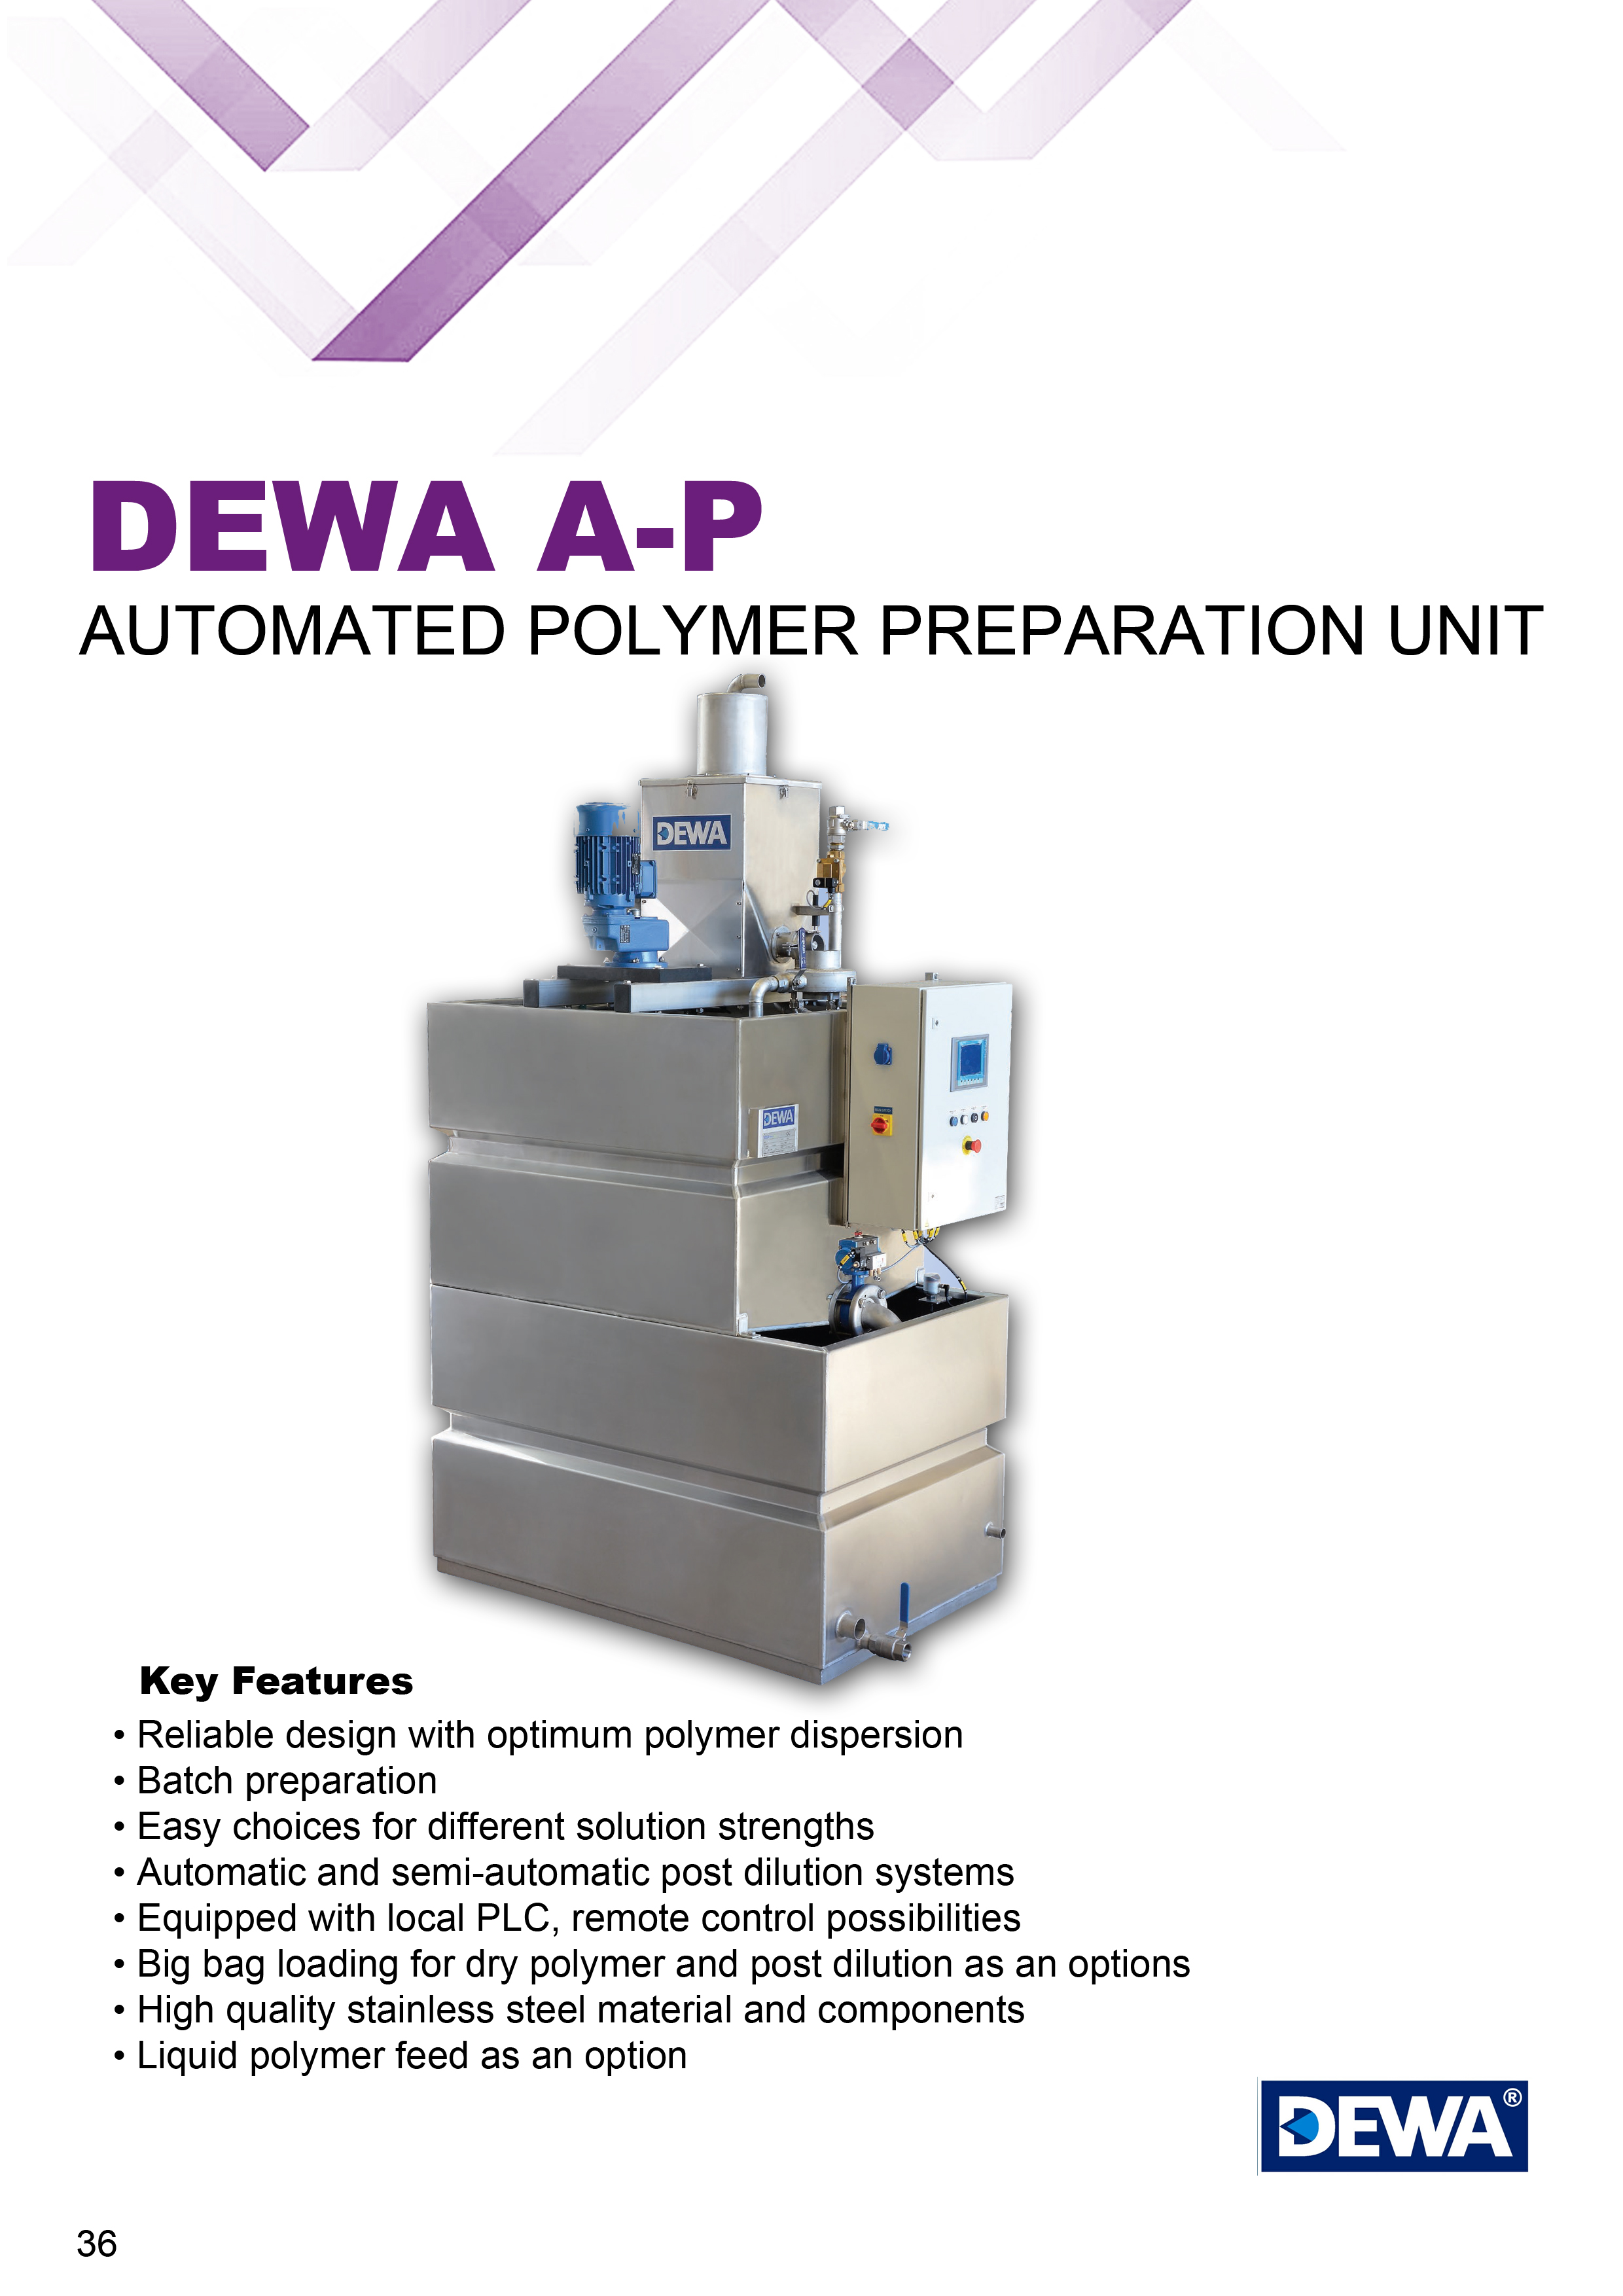 Polymer preparation unit